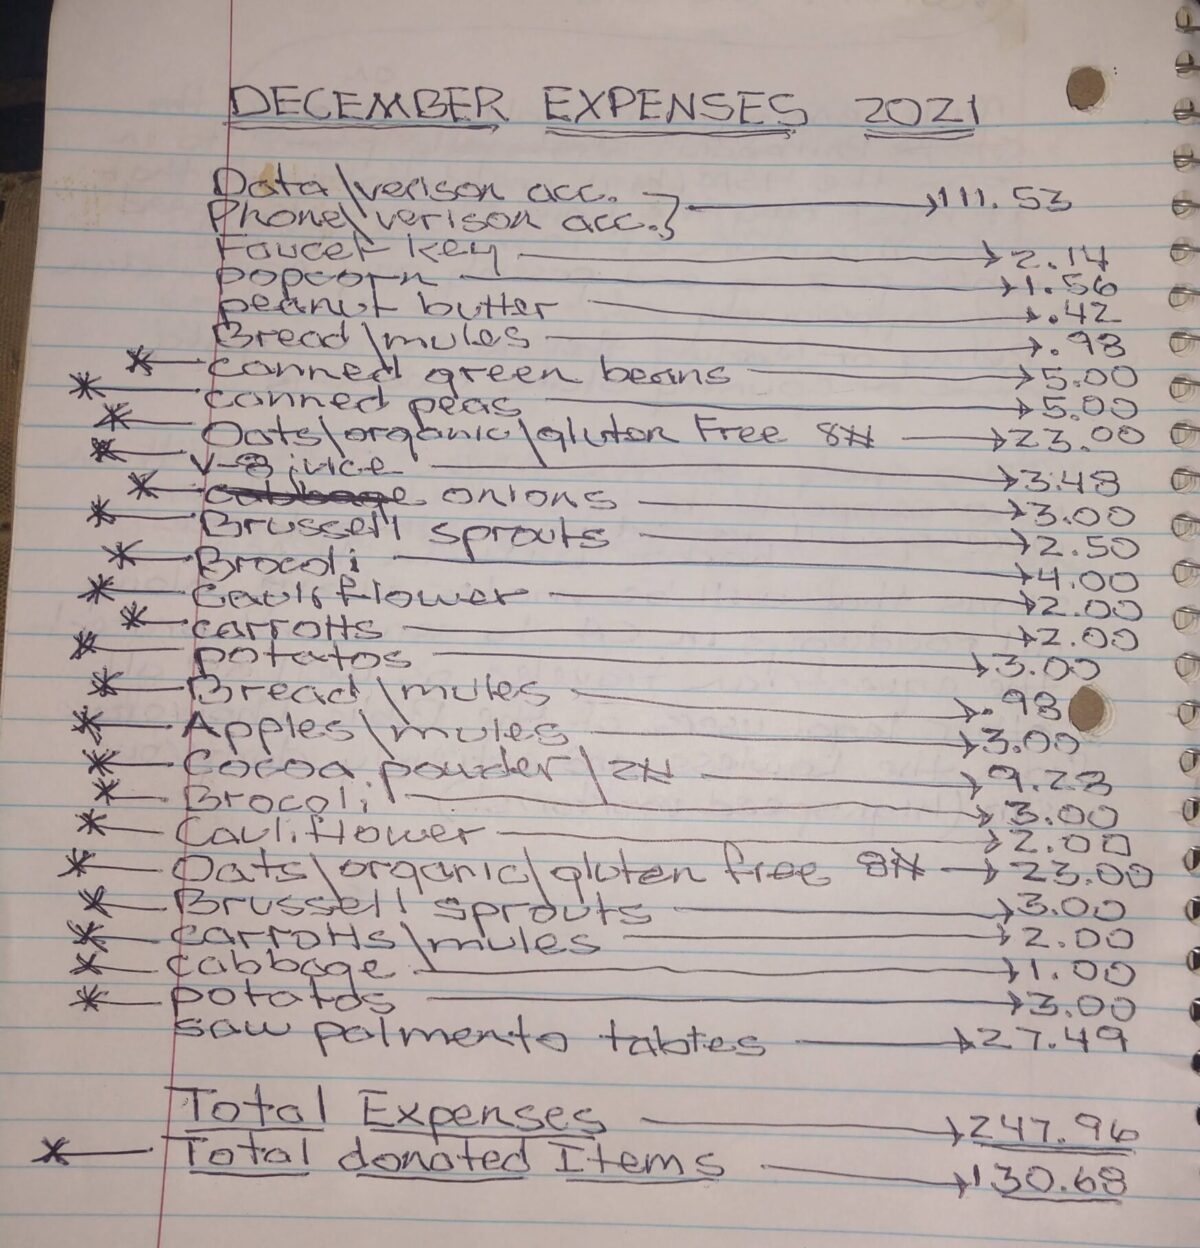 December 2021 Expenses $247.96